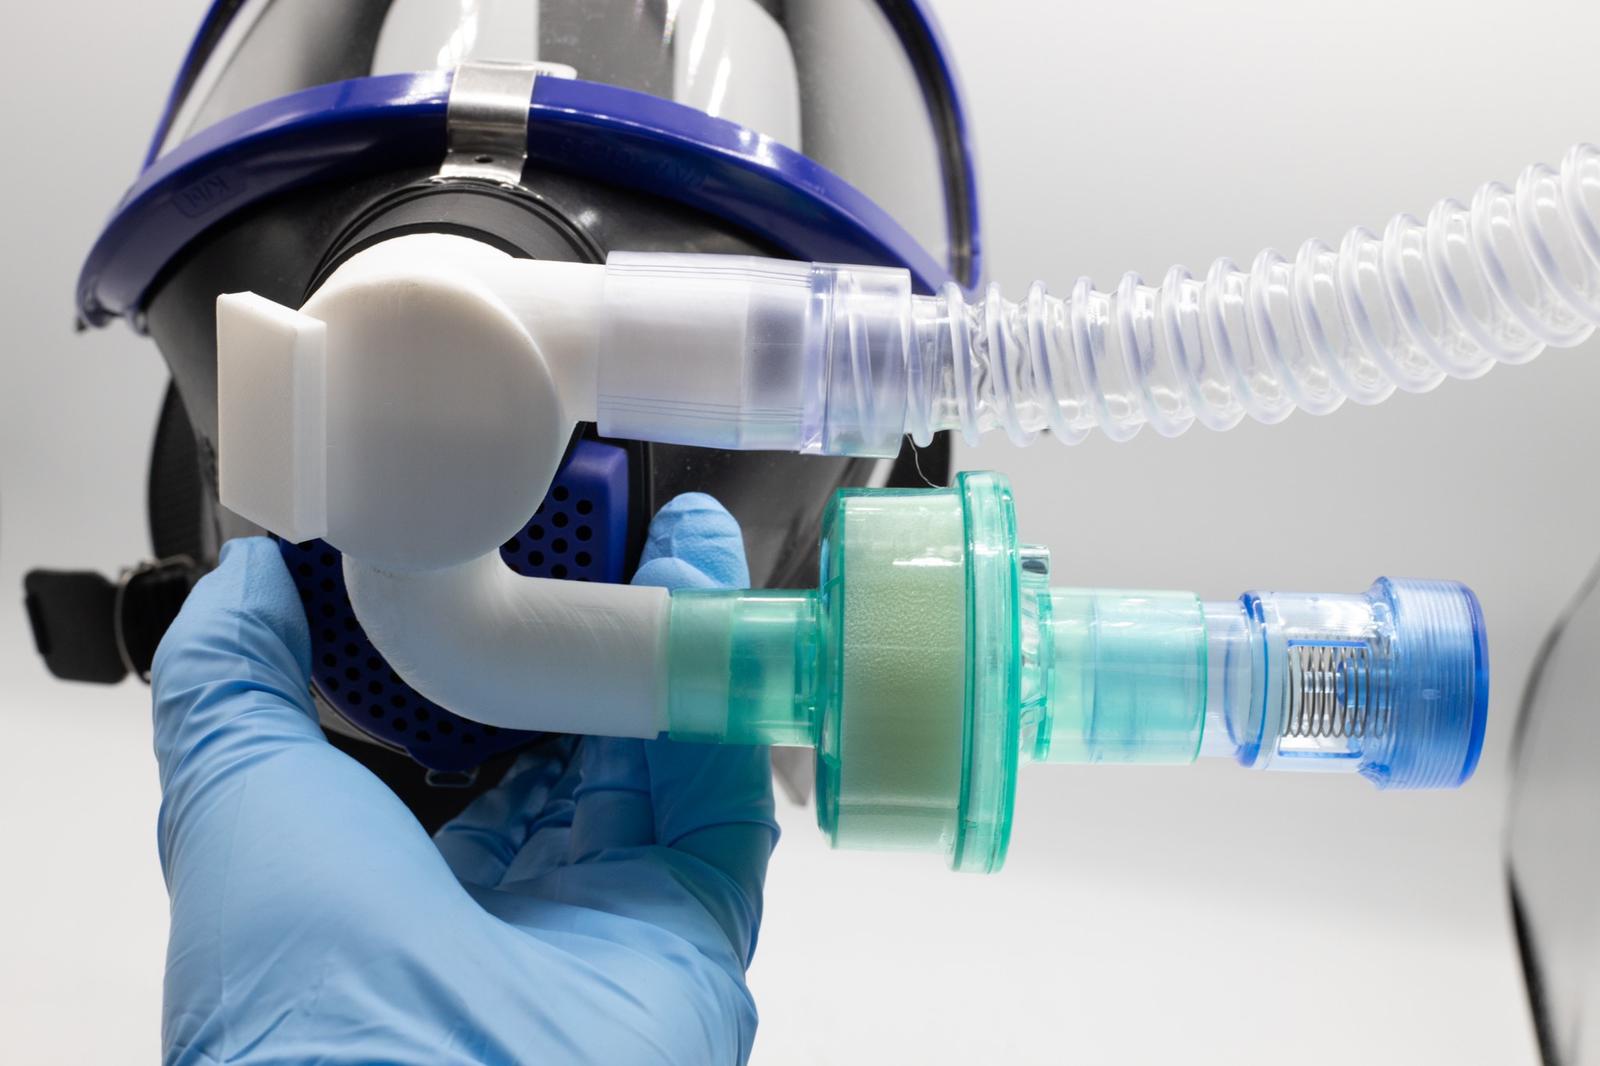 Un tecnico ravennate trasforma una maschera a gas in un respiratore biomedicale